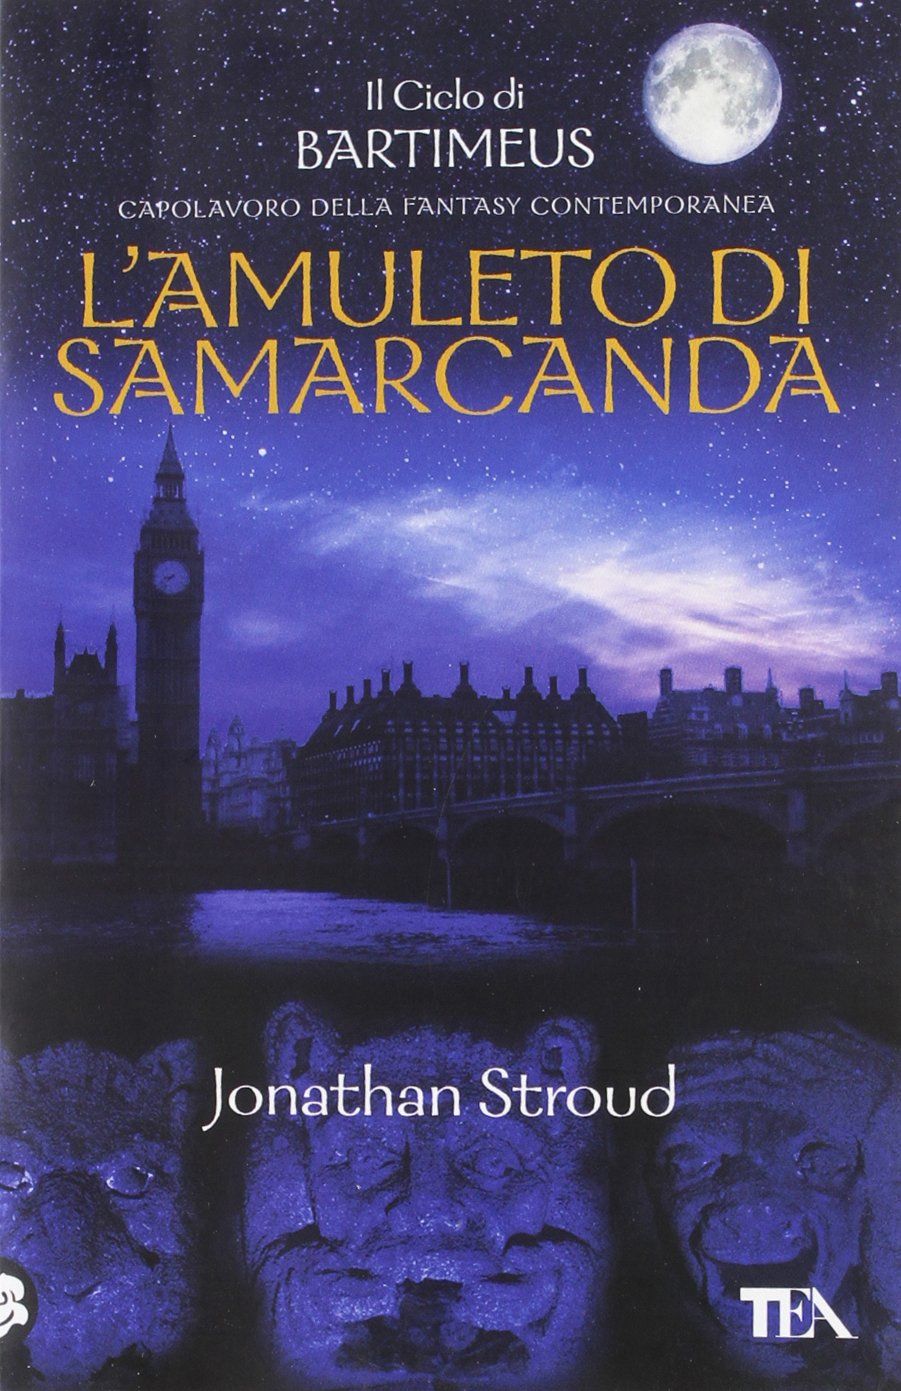 Landmark, Text, Sky, Poster, Book cover, Fiction, Movie, World, Novel, Midnight, 